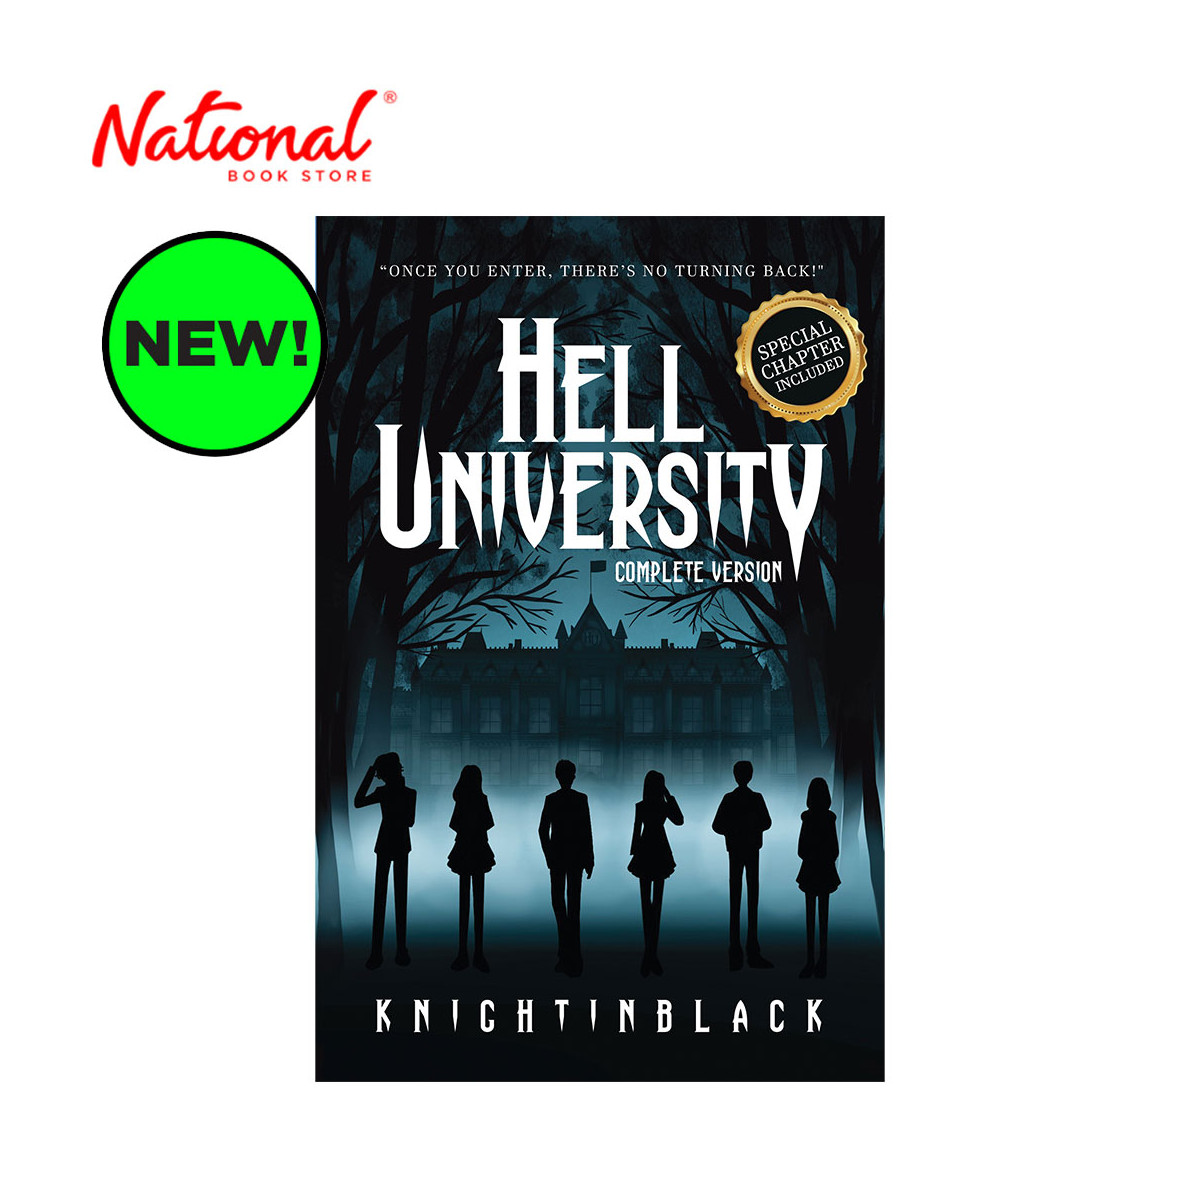 Hell University (Complete Edition) by Knightinblack - Trade Paperback - Wattpad